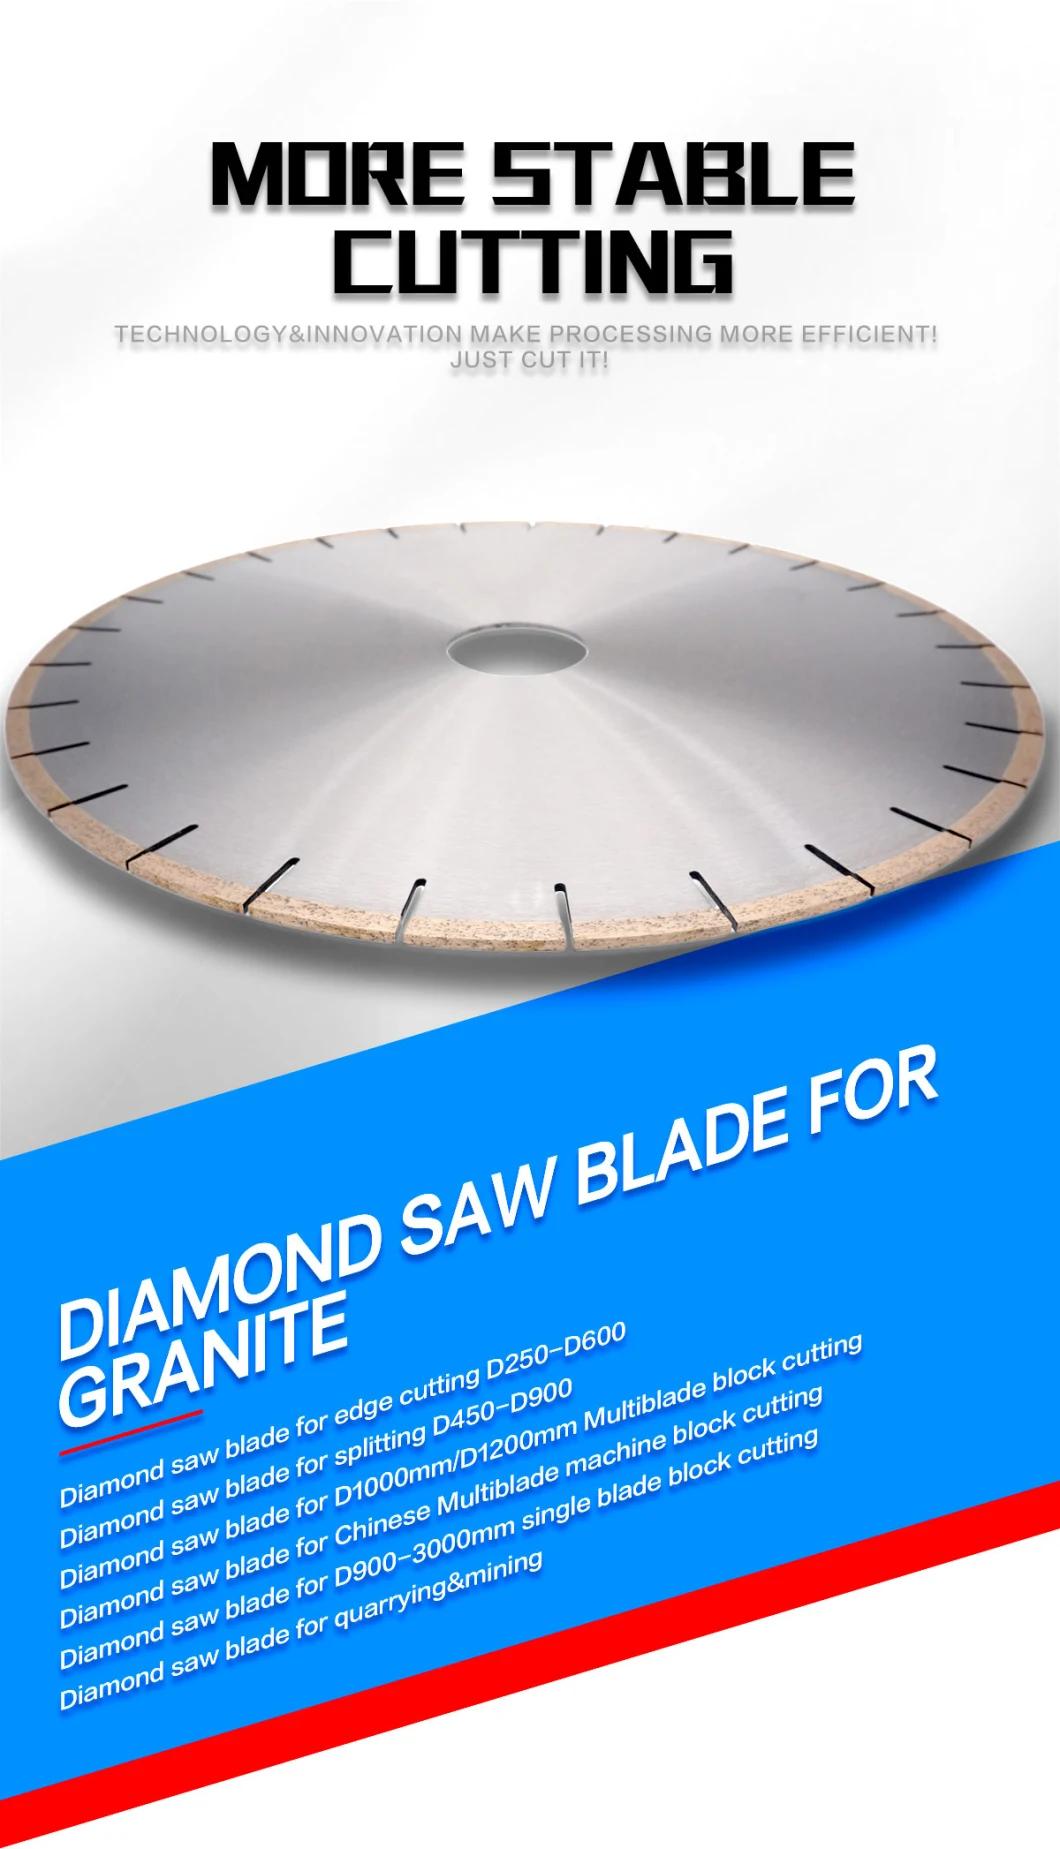 Large Daily Output Capacity Tungsten Carbide Circular Saw Blade for Circular Saw